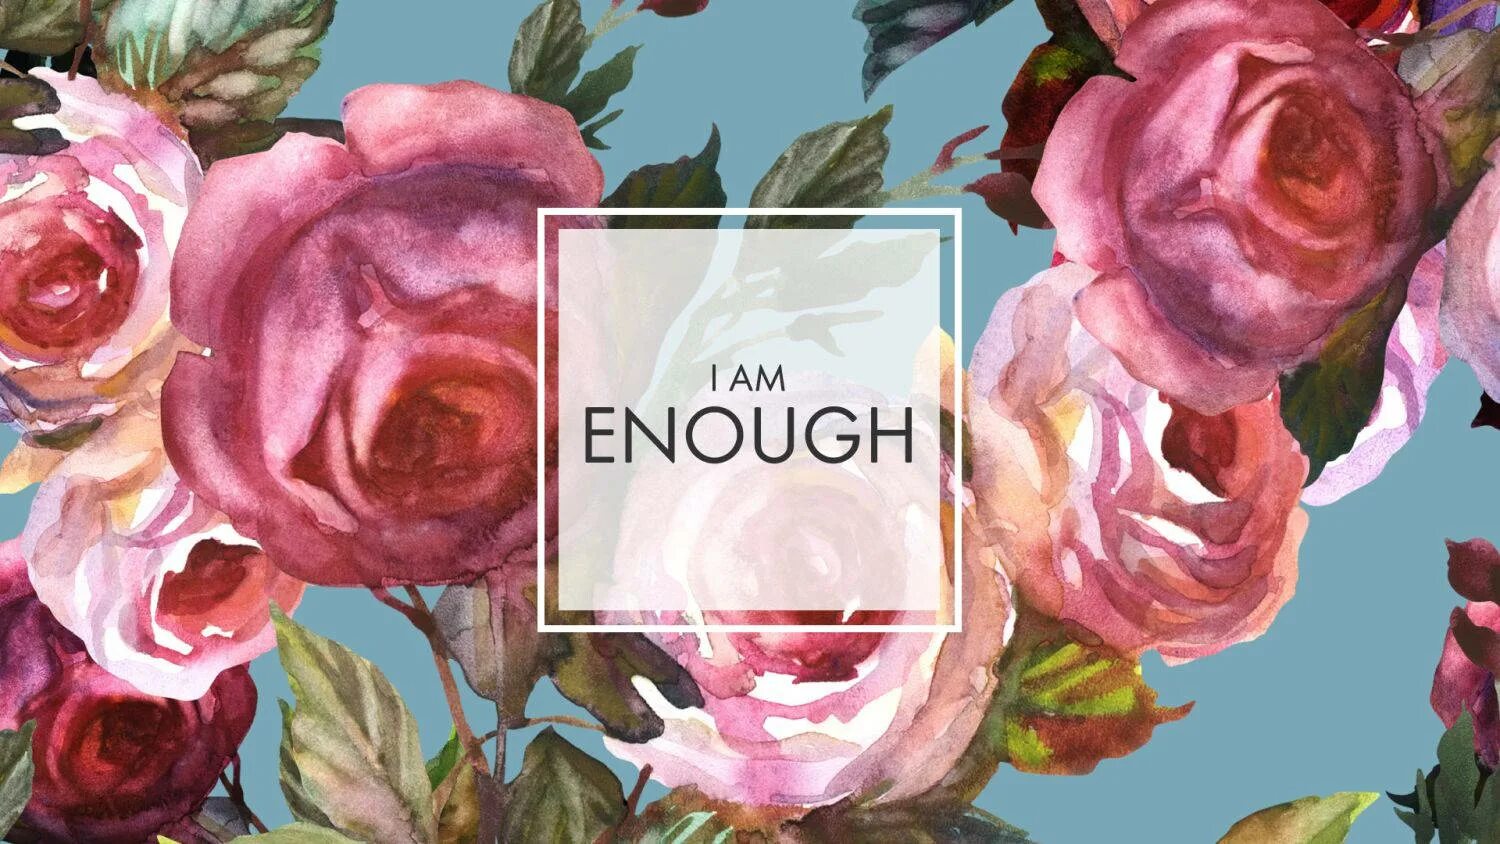 I am enough. Enough картинка. Картинка i am enough. I am enough Wallpaper. L am enough